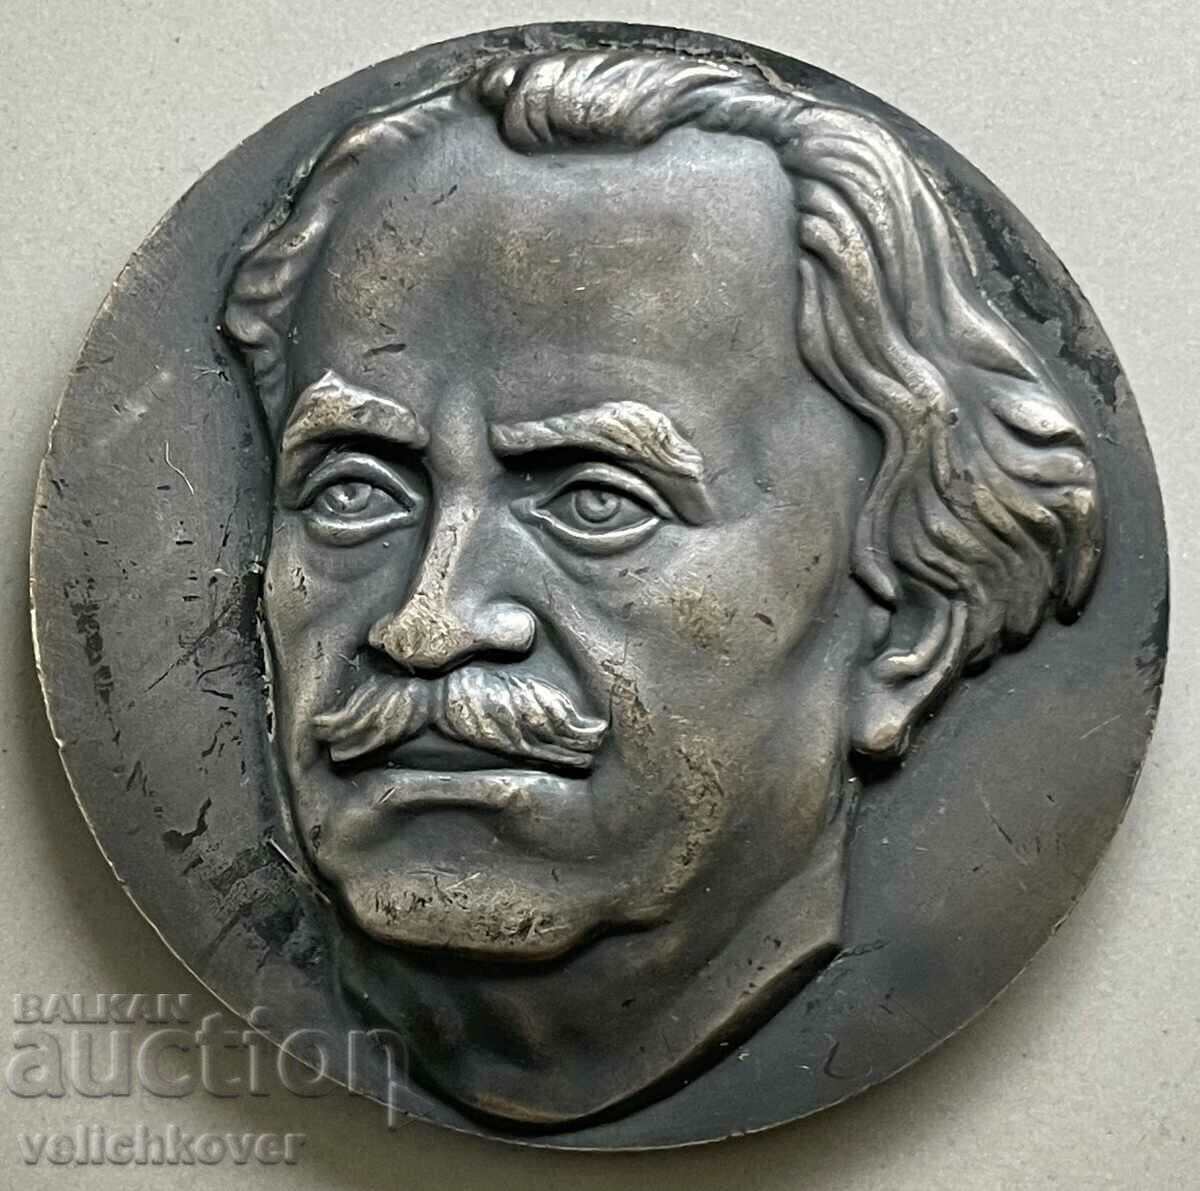 34136 Bulgaria plaque Georgi Dimitrov leader and teacher bronze